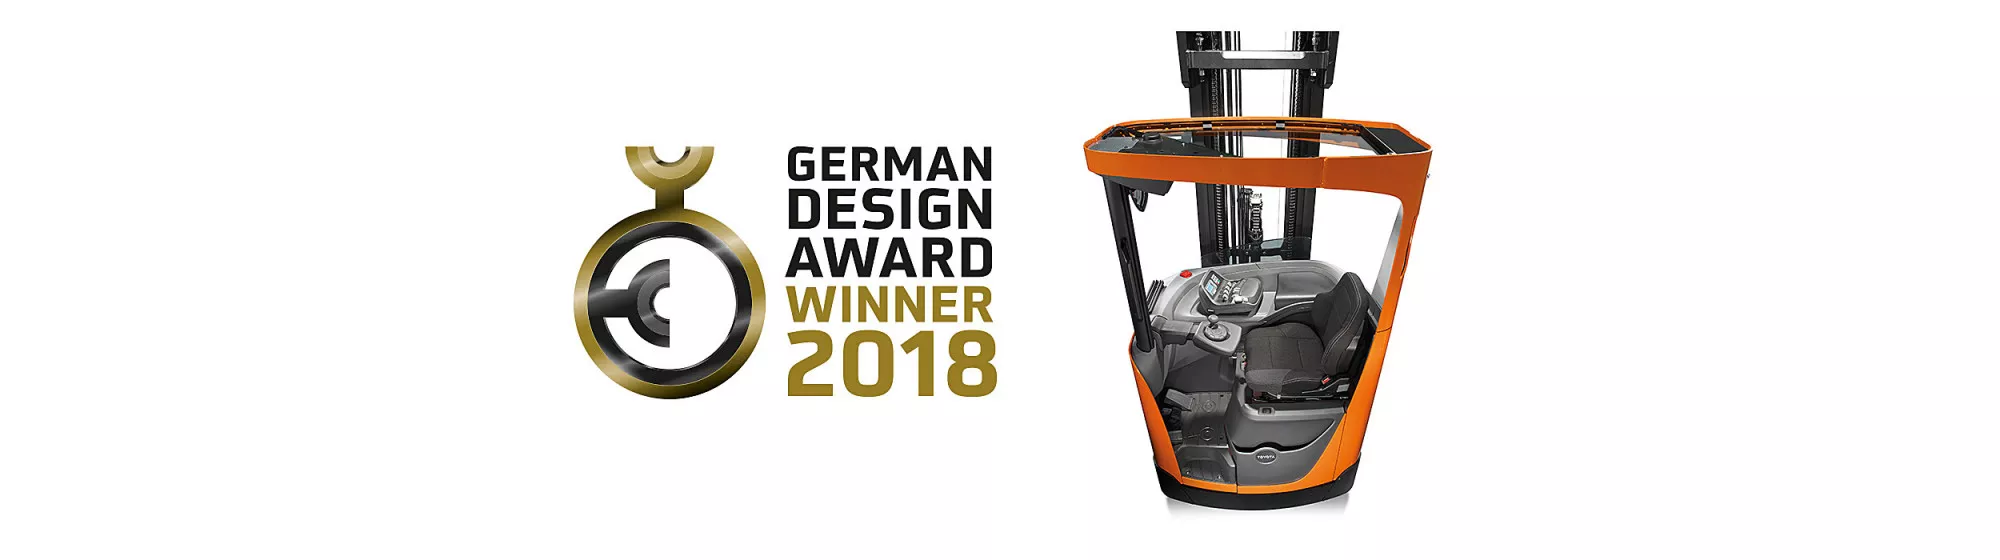 BT Reflex R-series получил награду German Design Award 2018